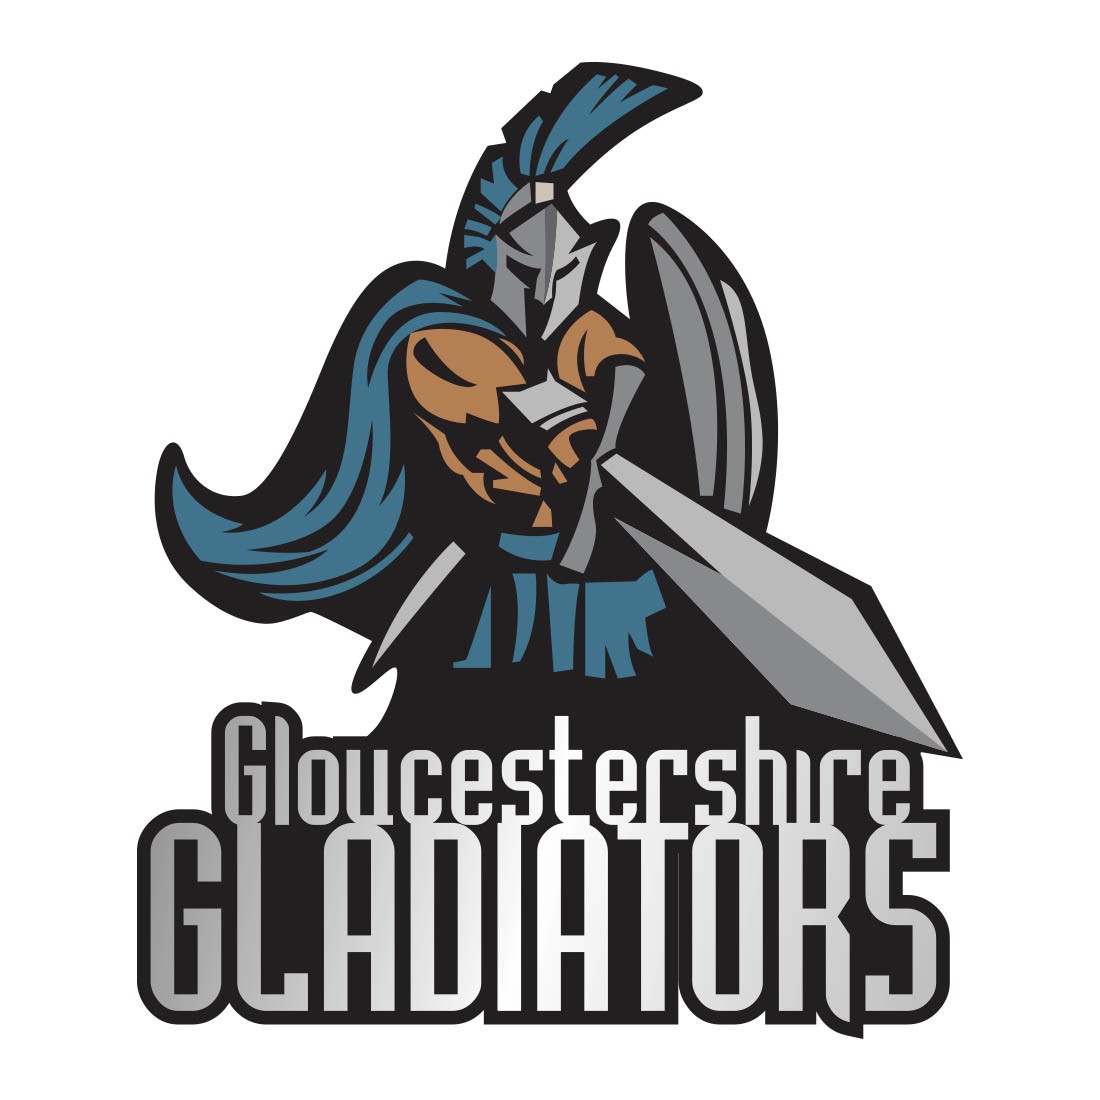 Gloucestershire Gladiators